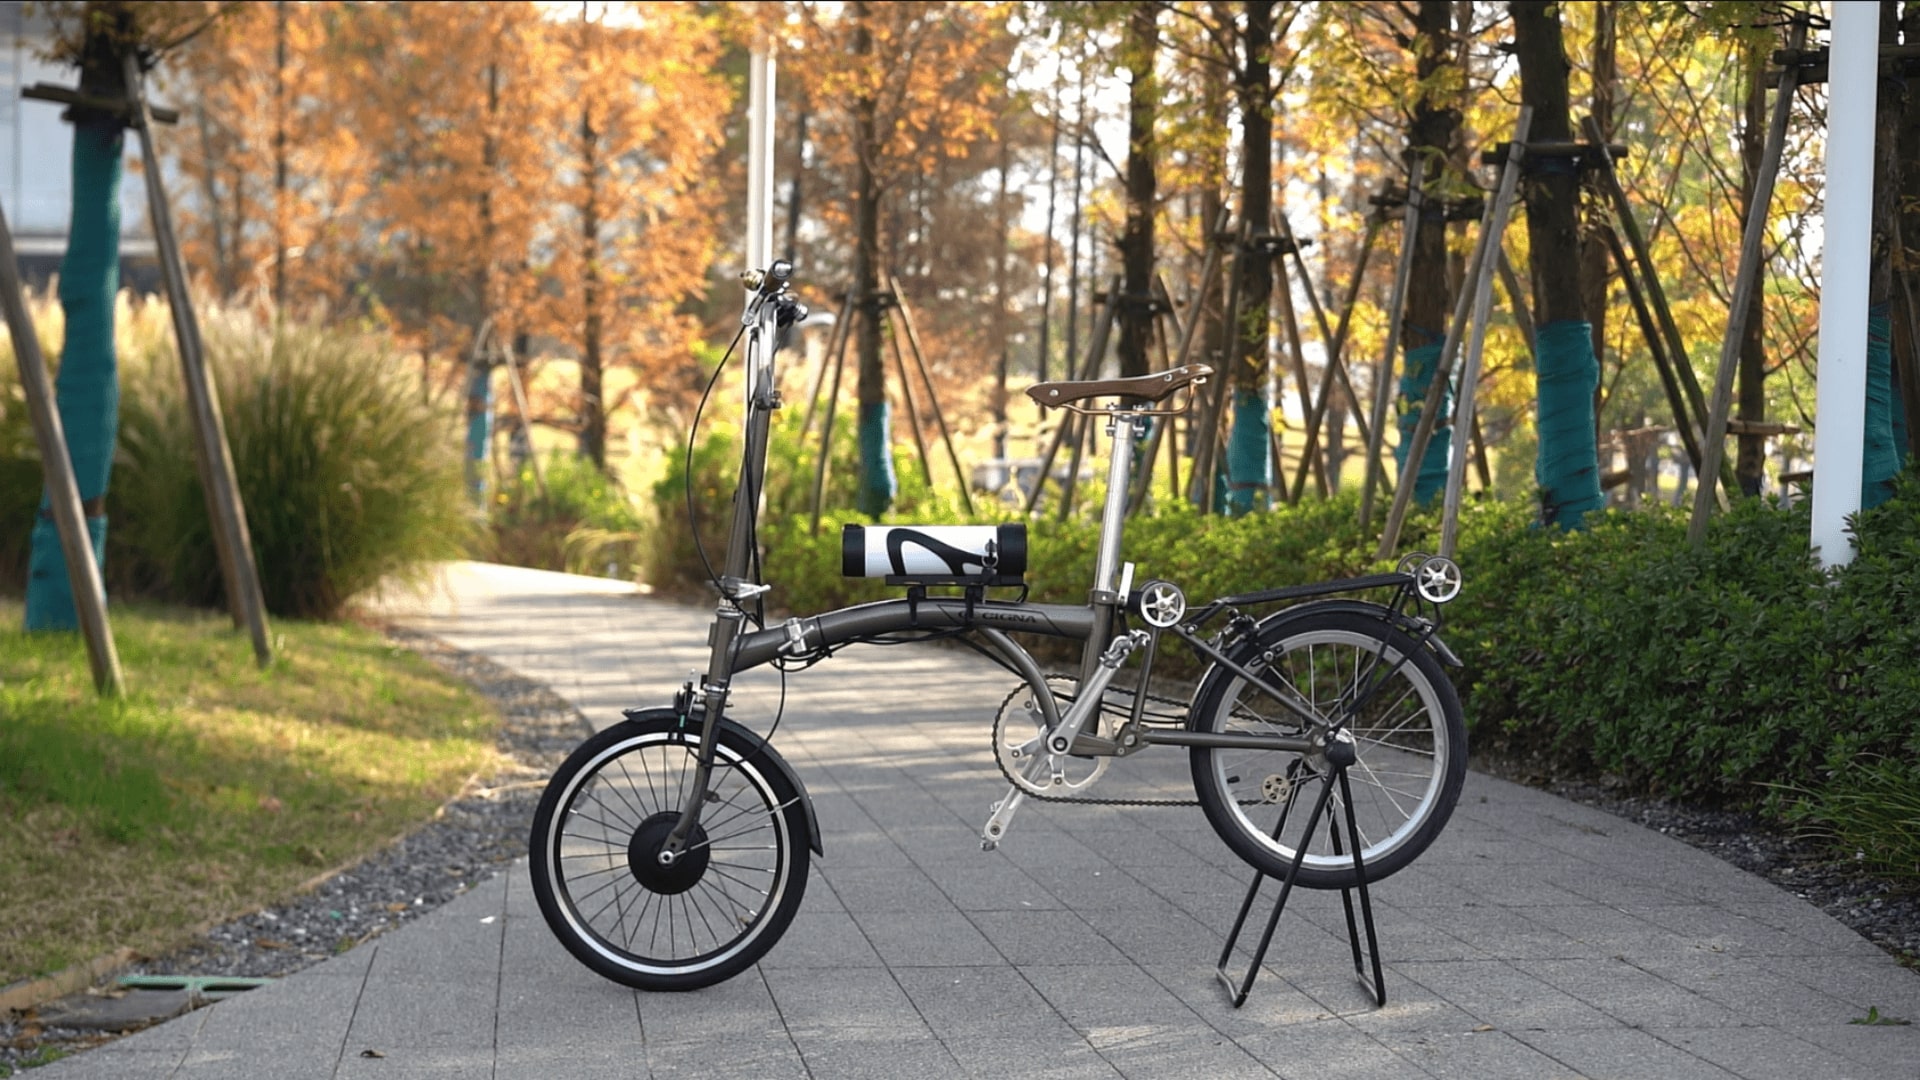 KN new design water bottle battery ebike kit / Fashionable bike conversion kit with Brushless Gear Hub Motor